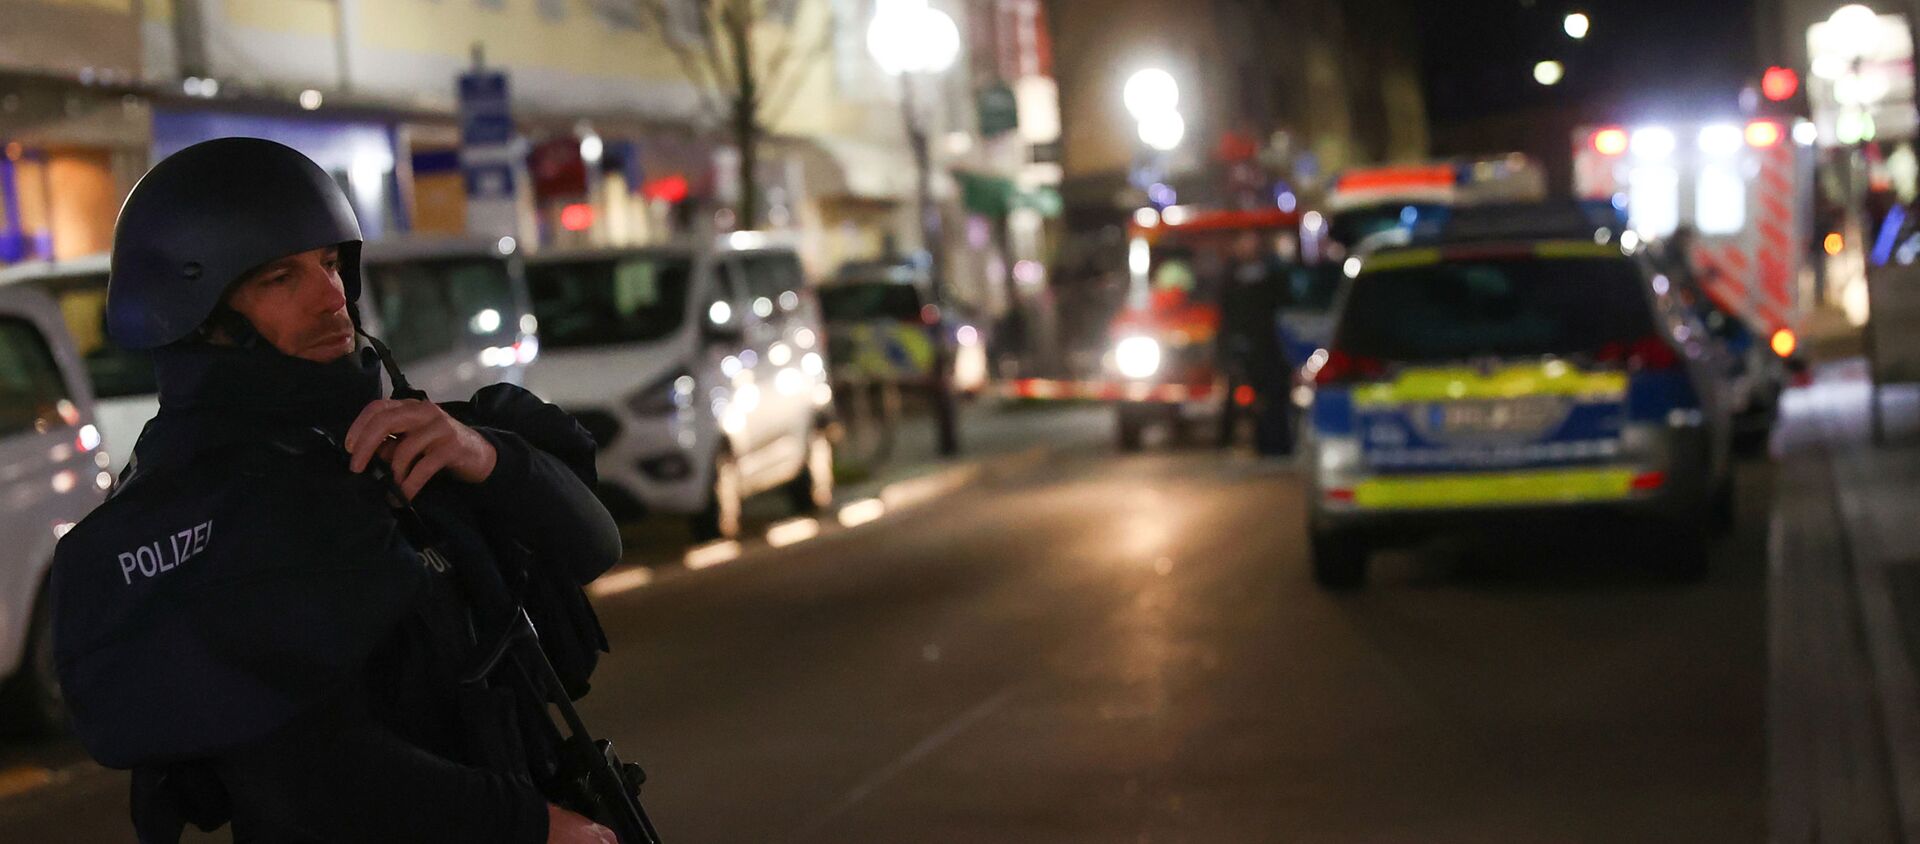 A police officer secures the area after a shooting in Hanau near Frankfurt, Germany, February 19, 2020 - Sputnik International, 1920, 19.02.2020